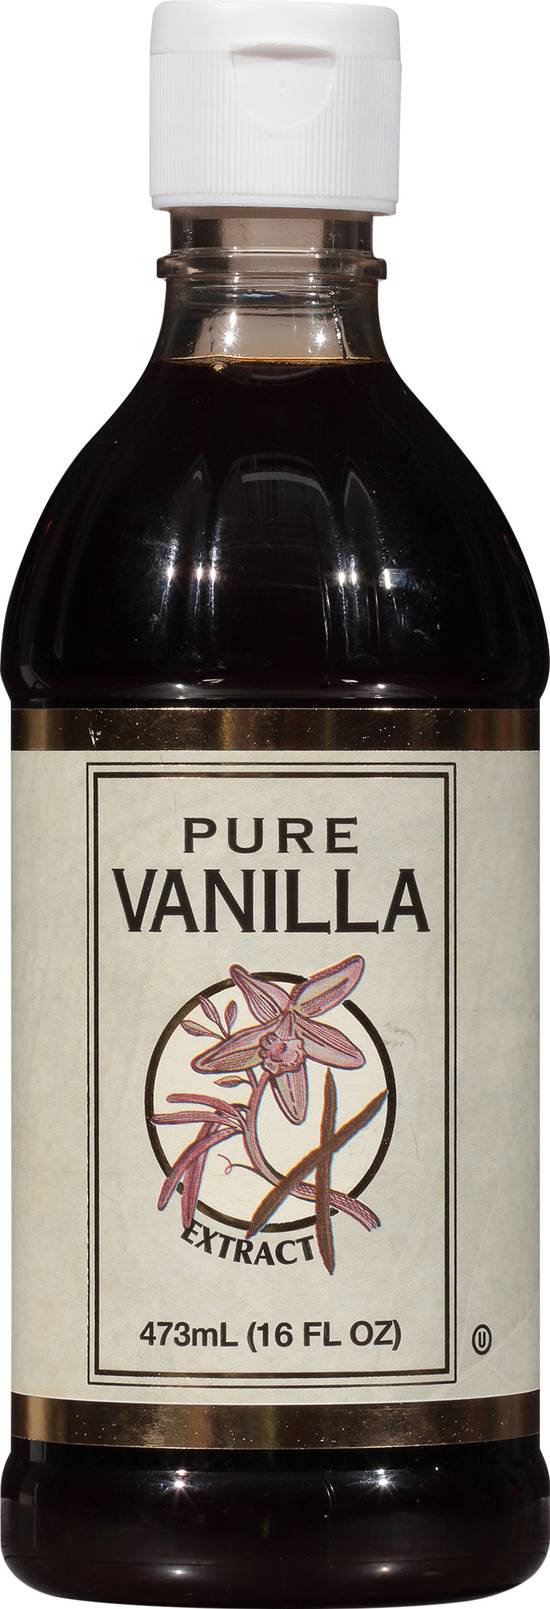 Pure Vanilla Extract (16 fl oz)